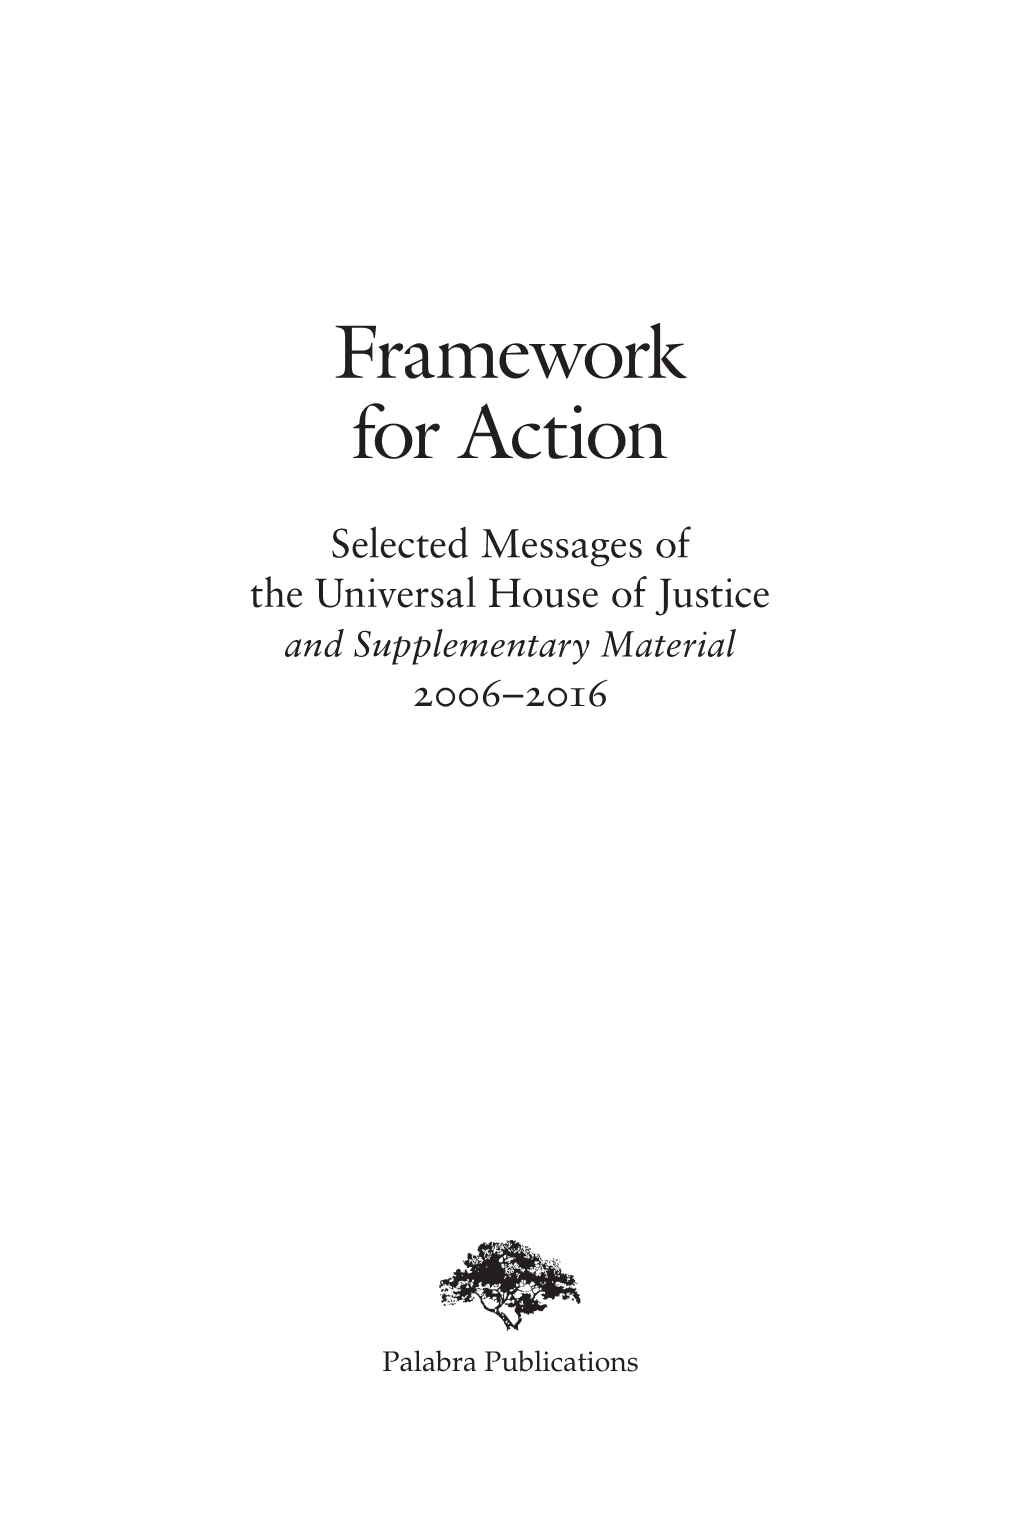 Framework for Action